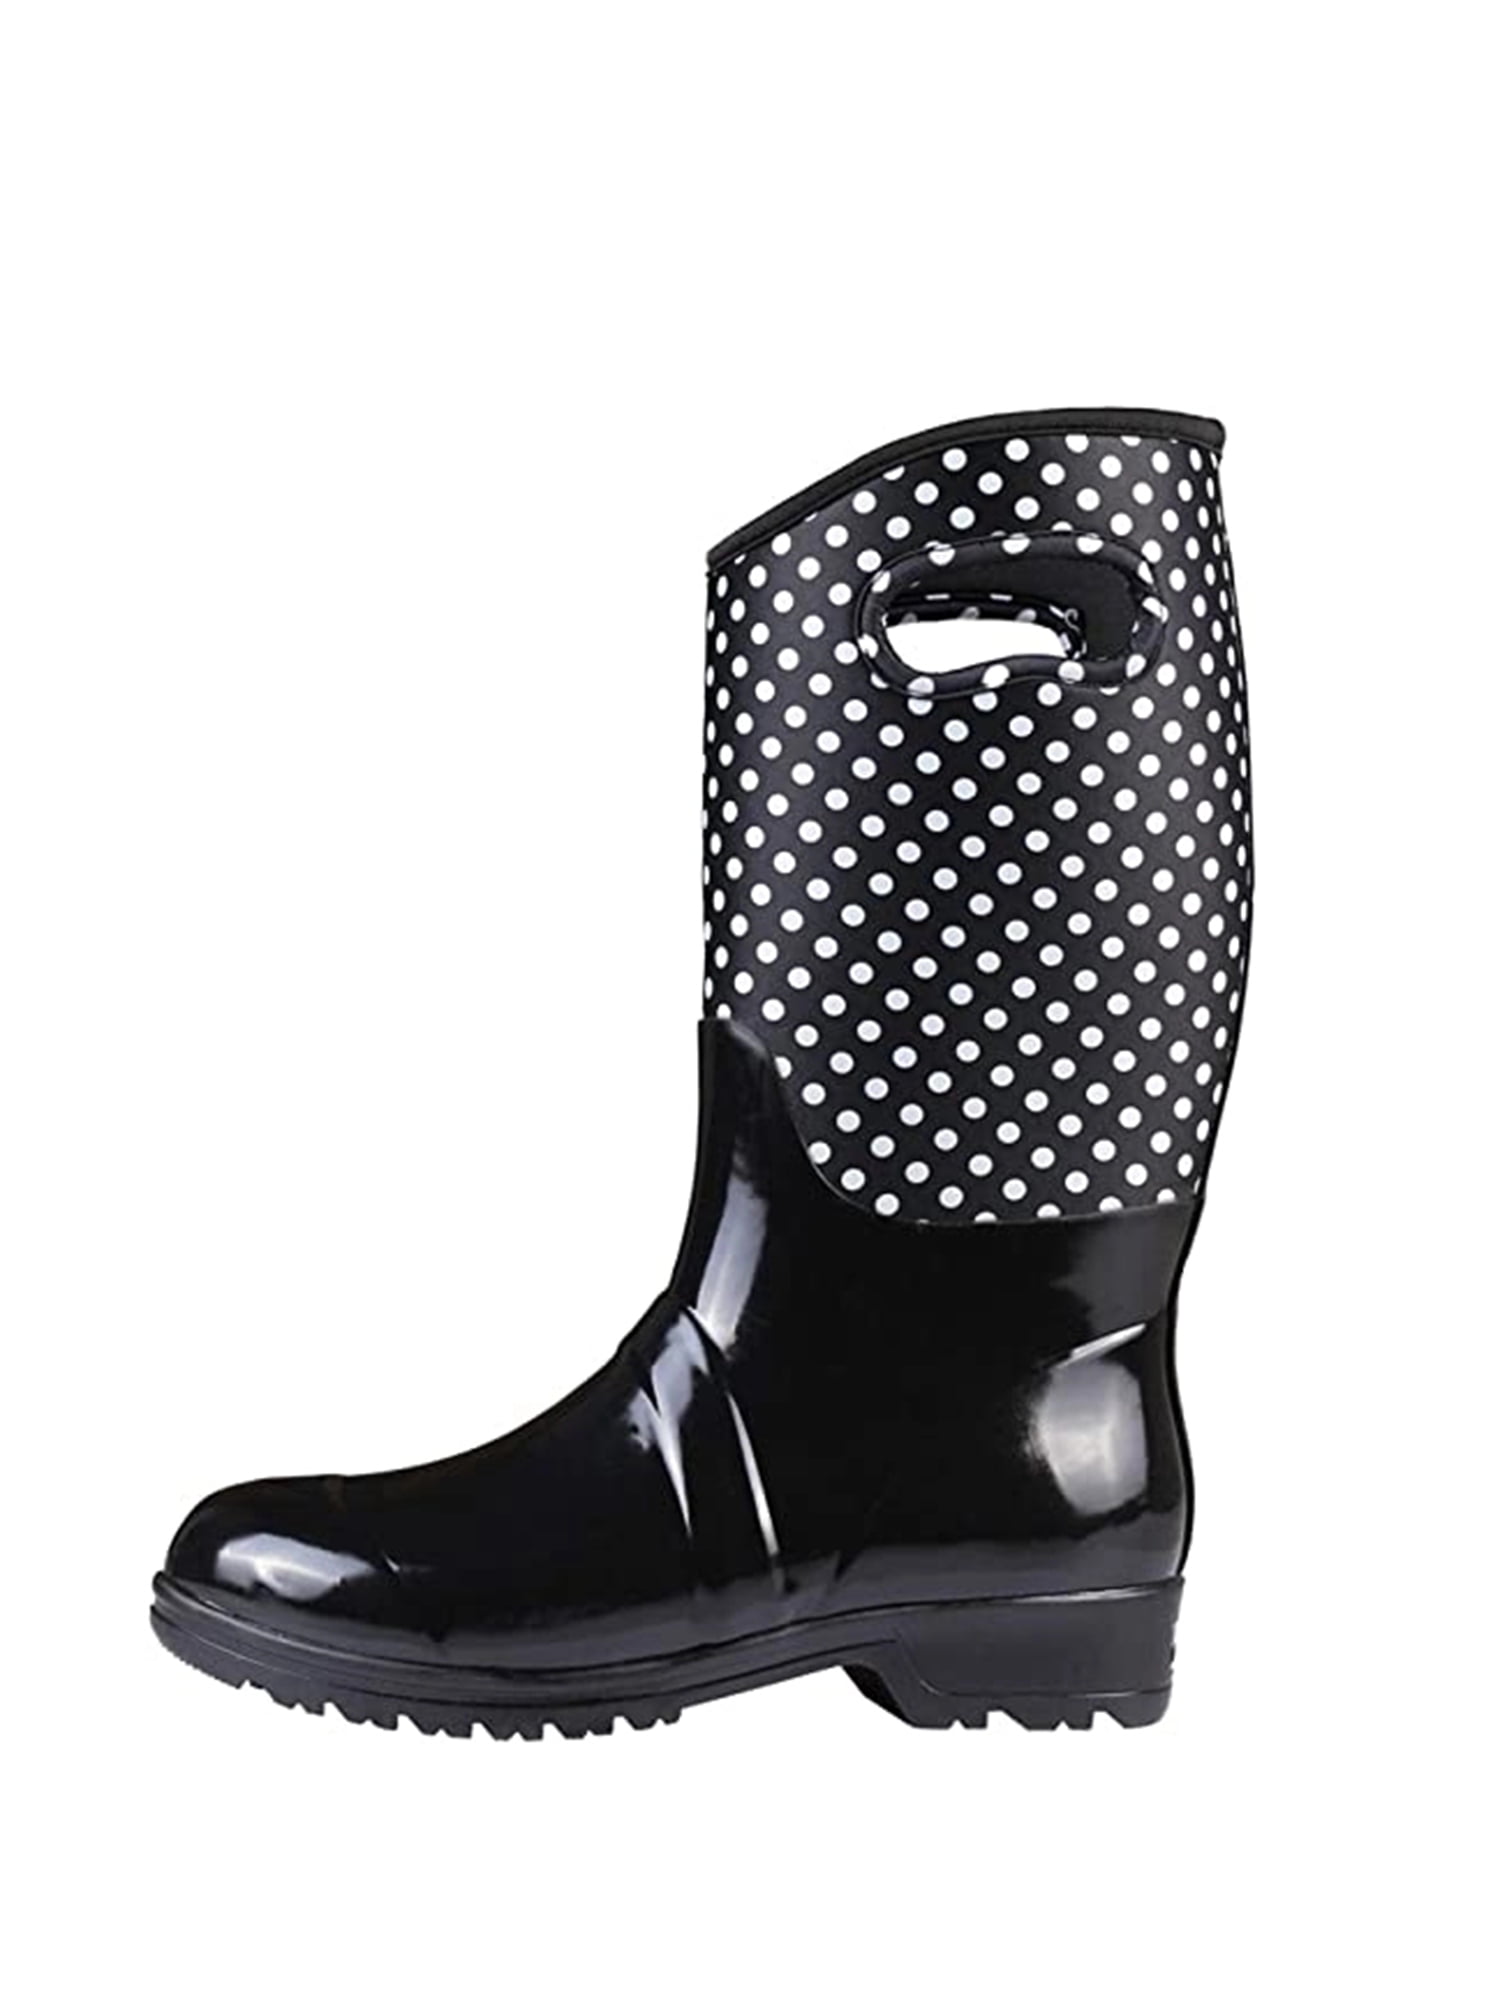 Tanleewa - Slip Resistant Women Rain Boots Fashion Neoprene Waterproof ...